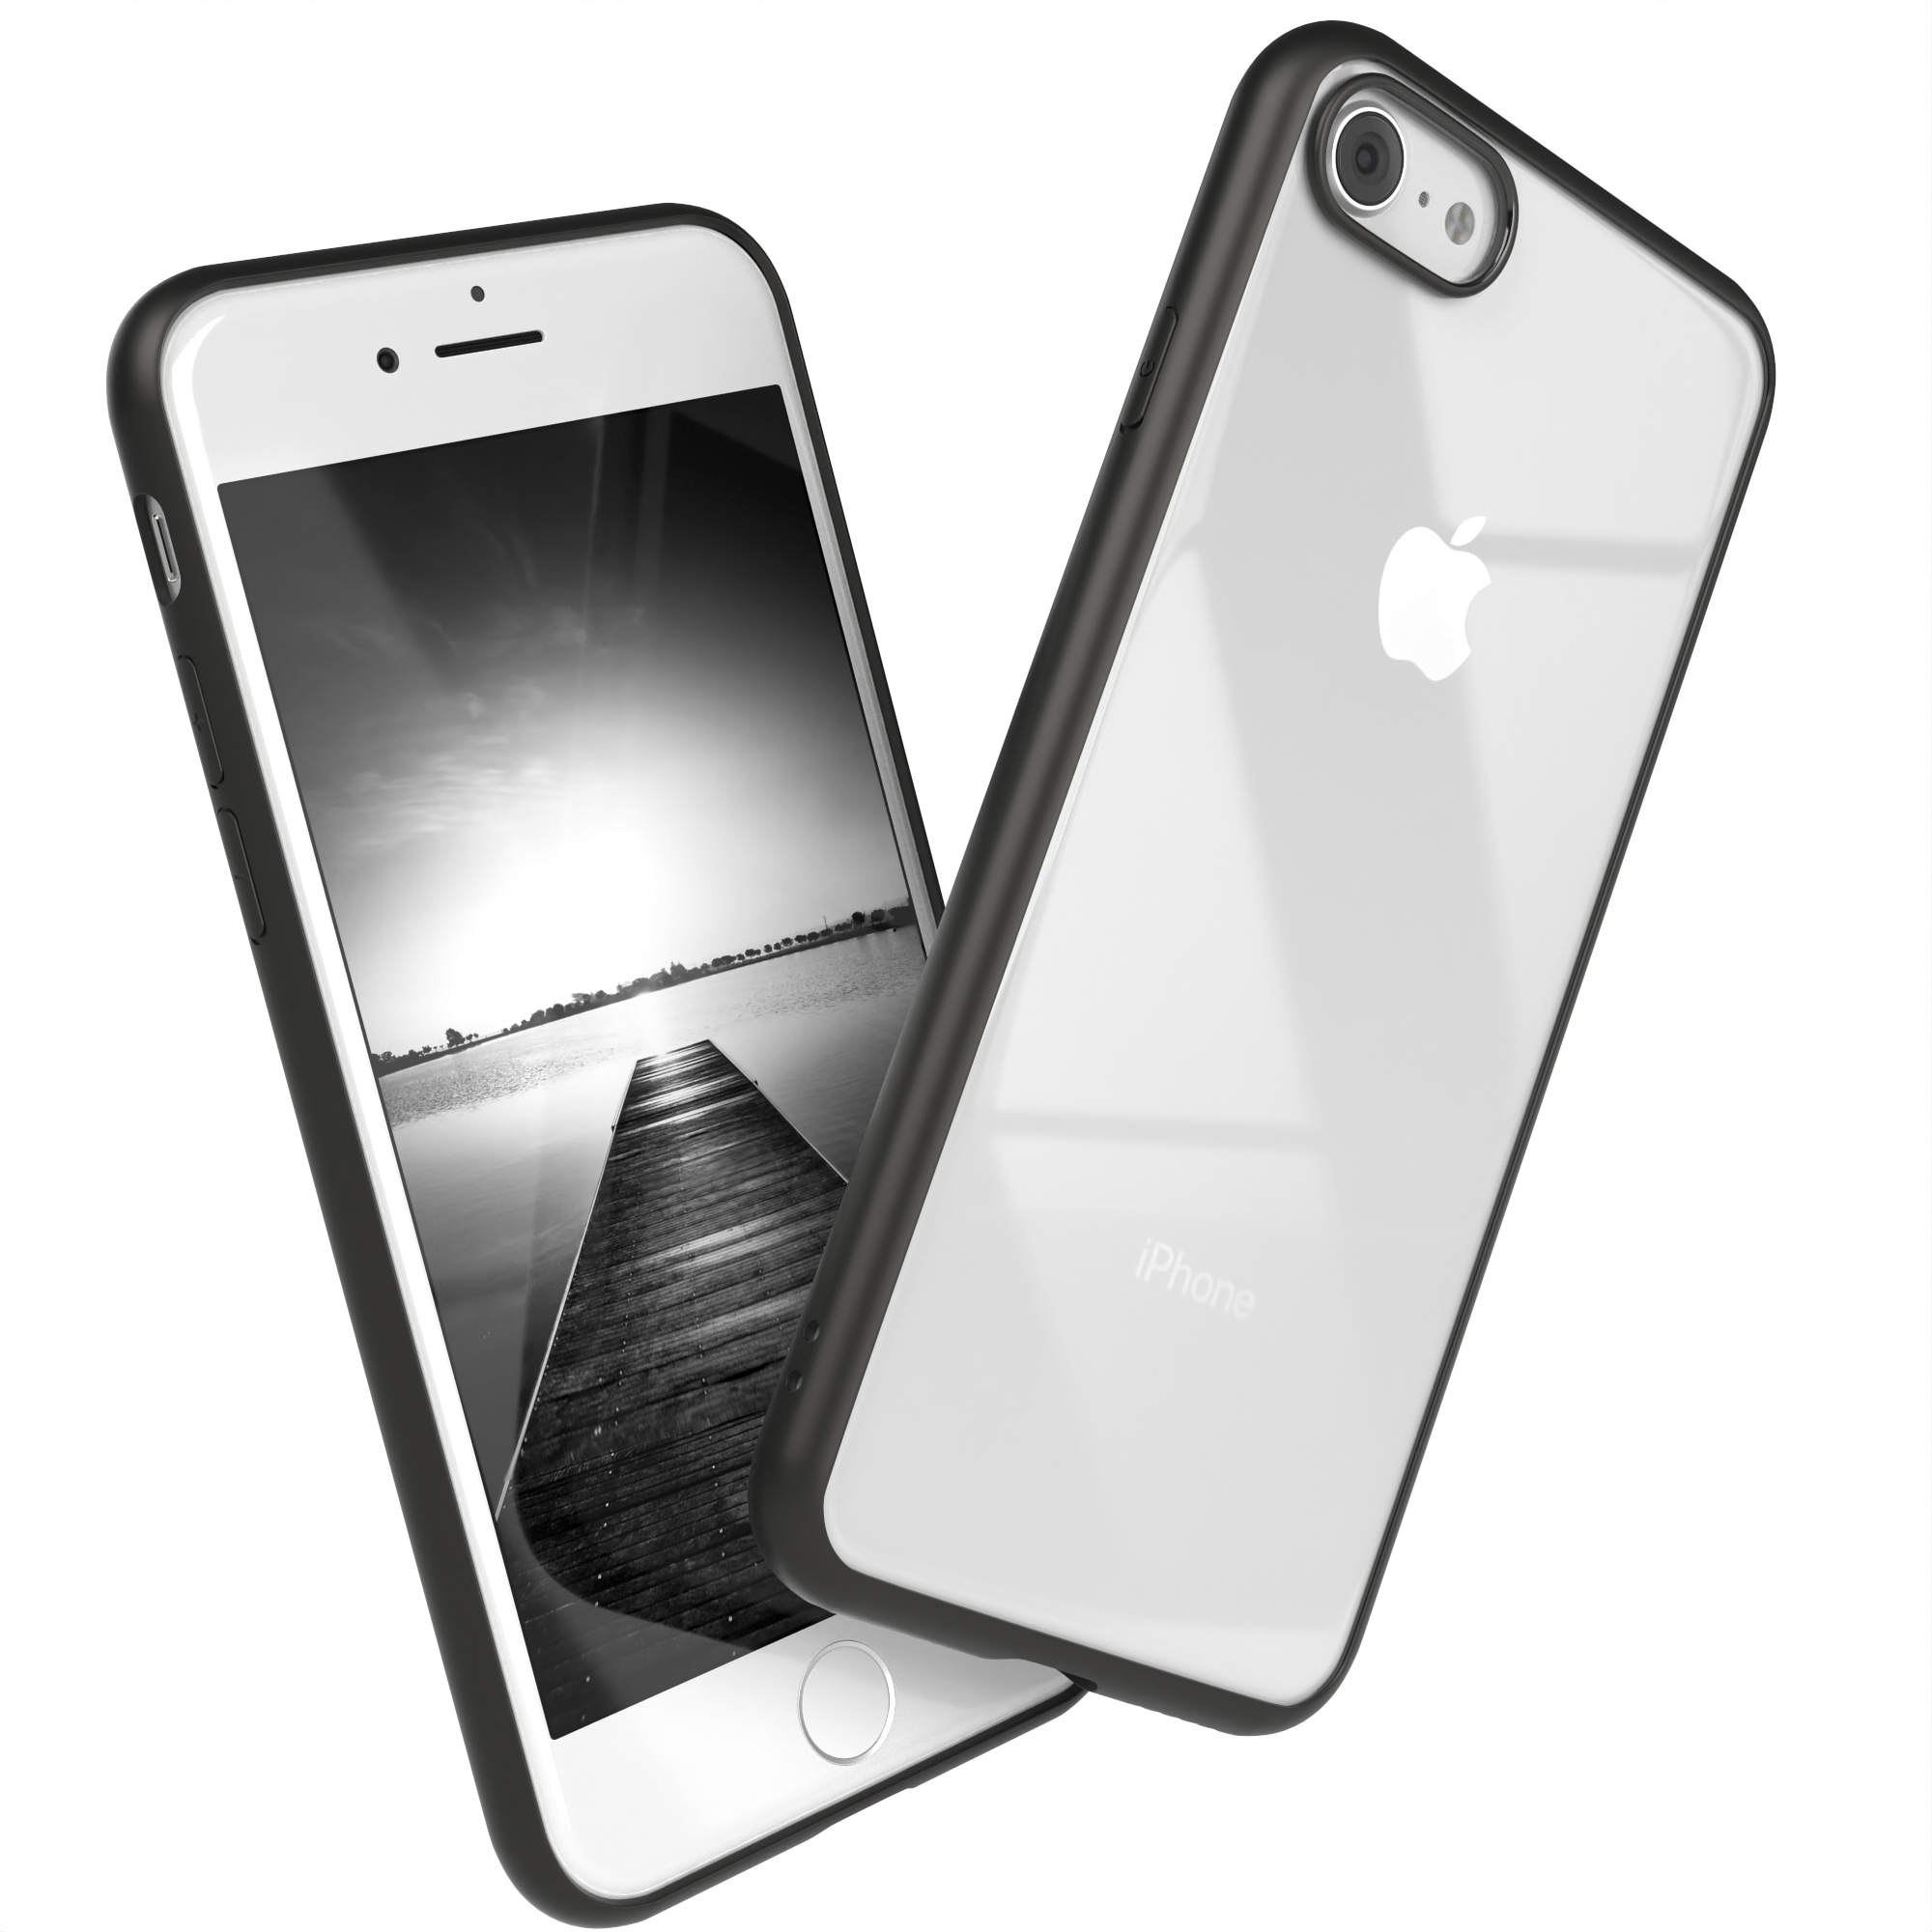 EAZY CASE Bumper Case, iPhone / / 8, SE SE Bumper, iPhone 2022 Schwarz 7 Apple, 2020